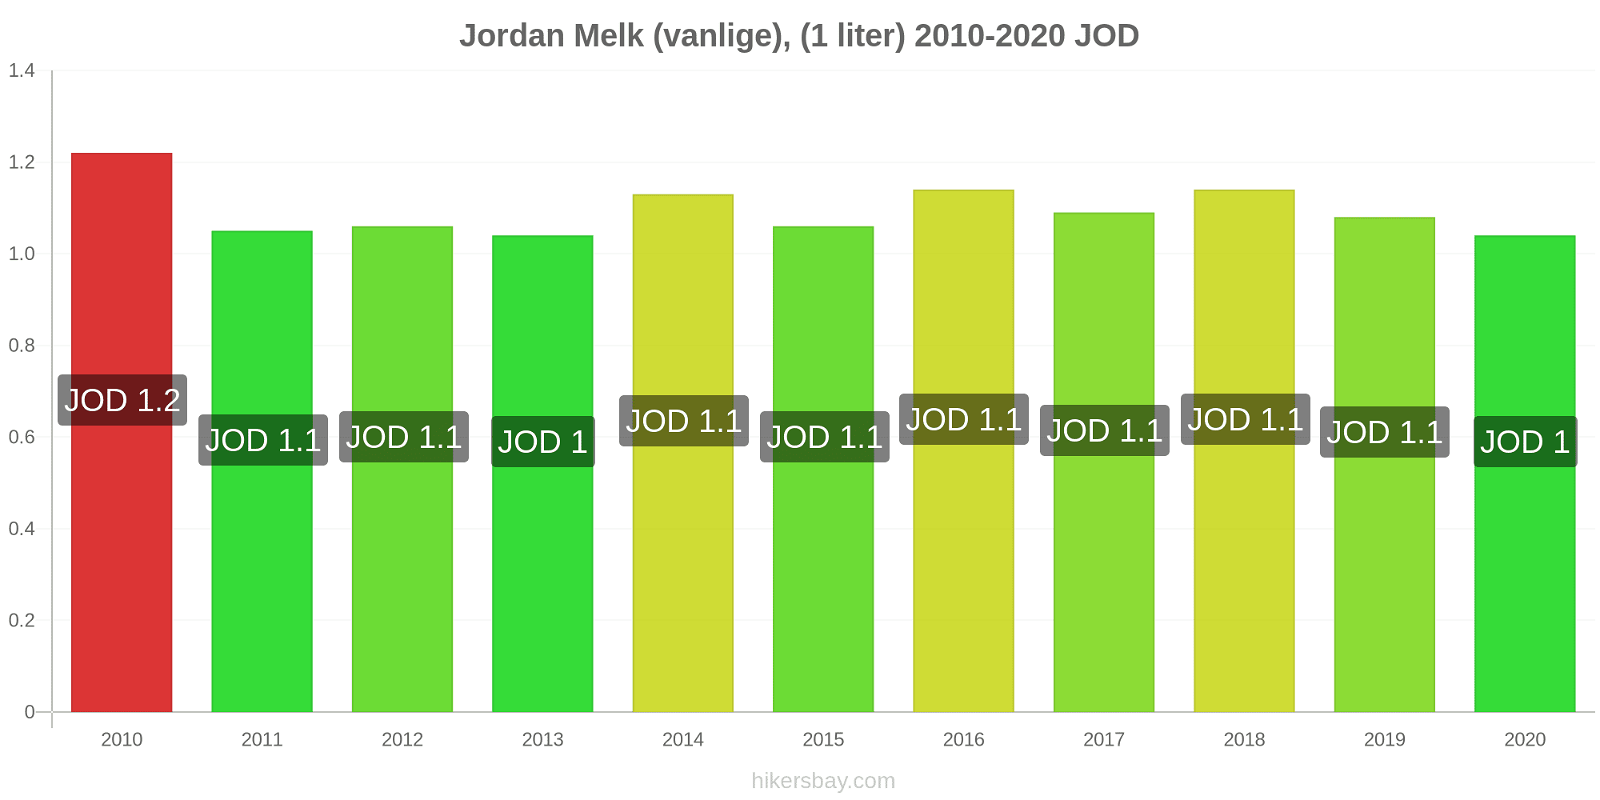 Jordan prisendringer Melk (vanlige), (1 liter) hikersbay.com